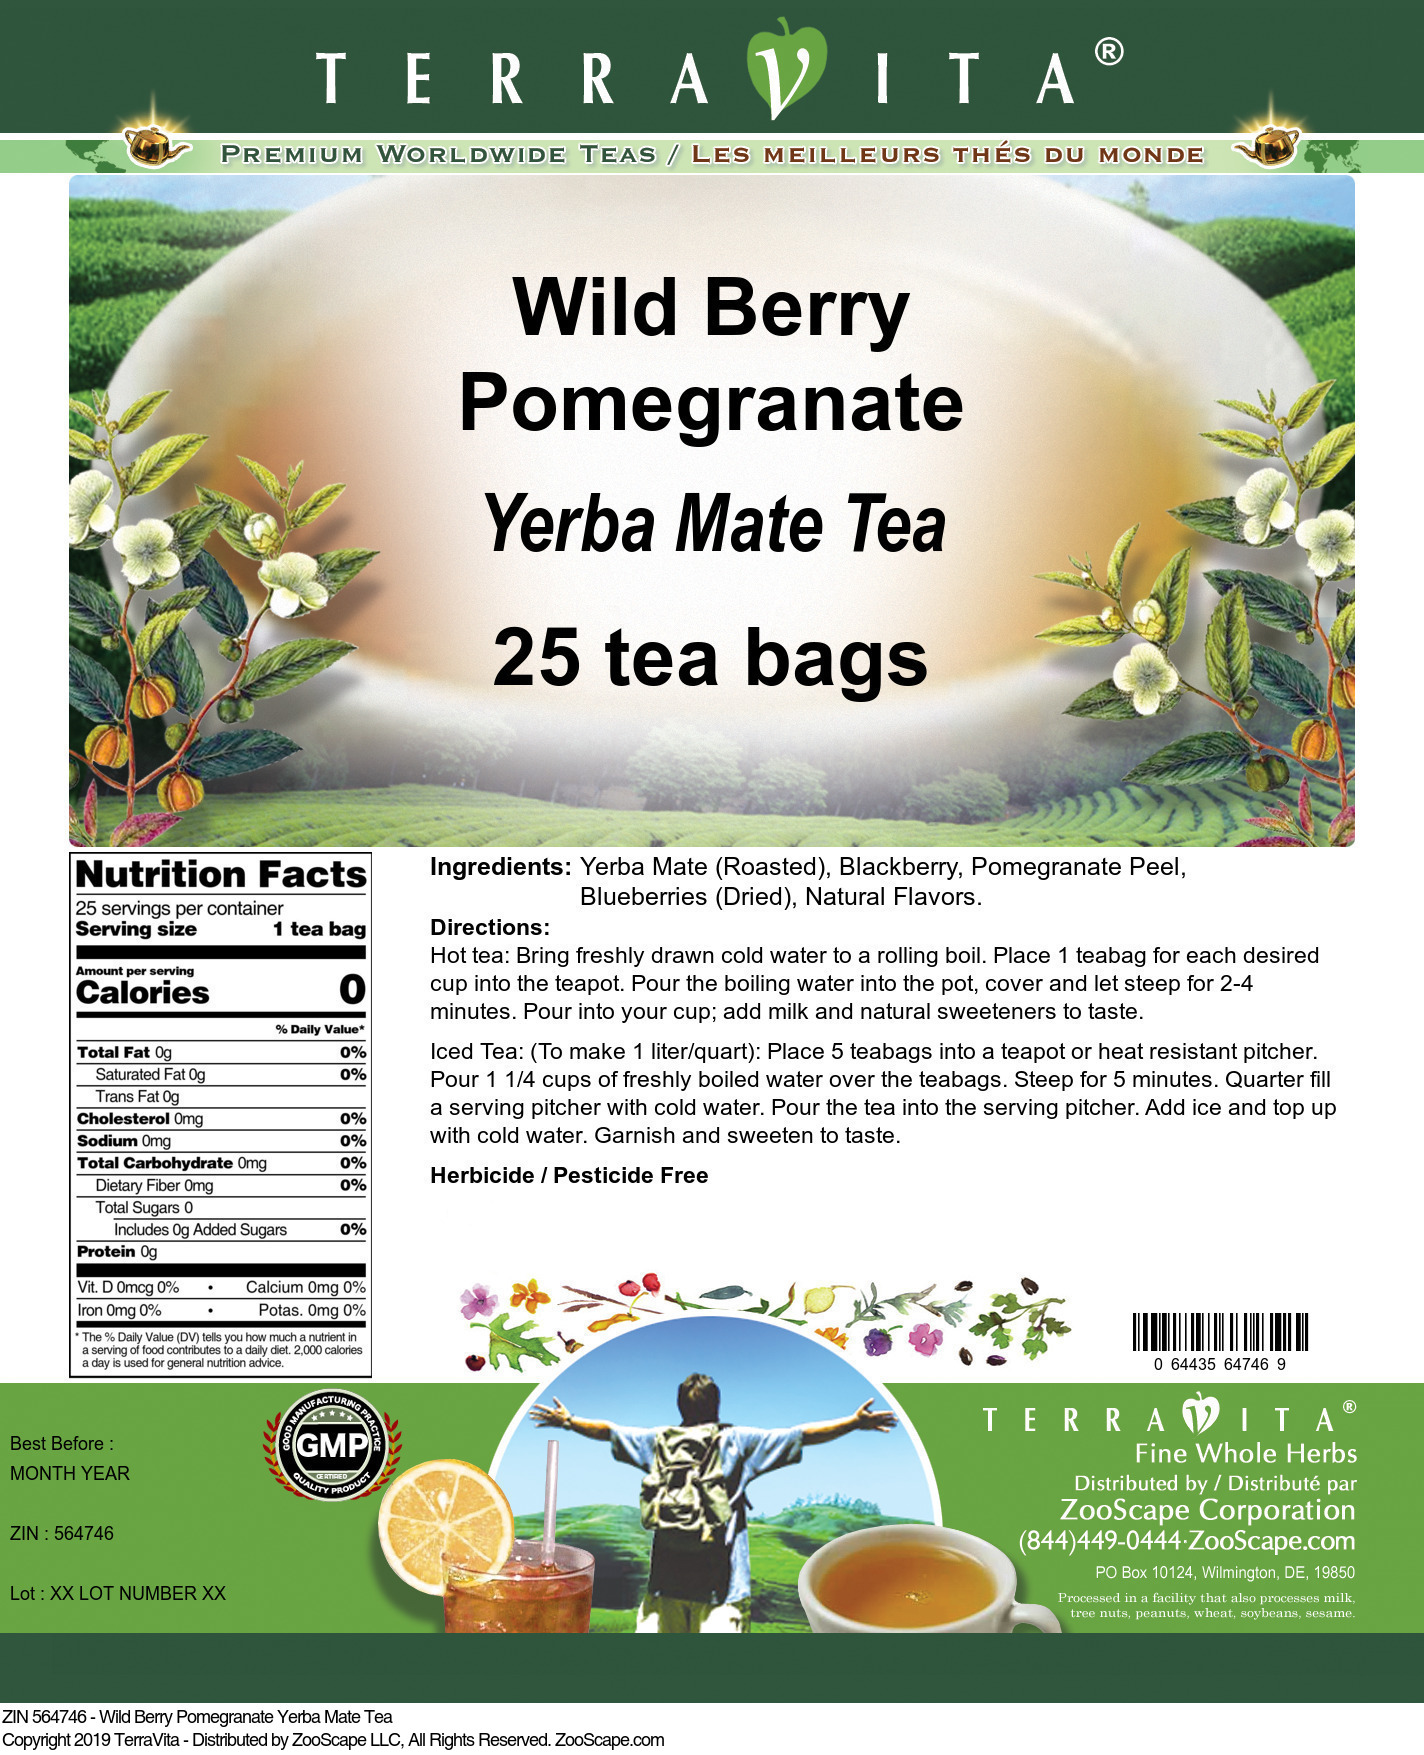 Wild Berry Pomegranate Yerba Mate Tea - Label